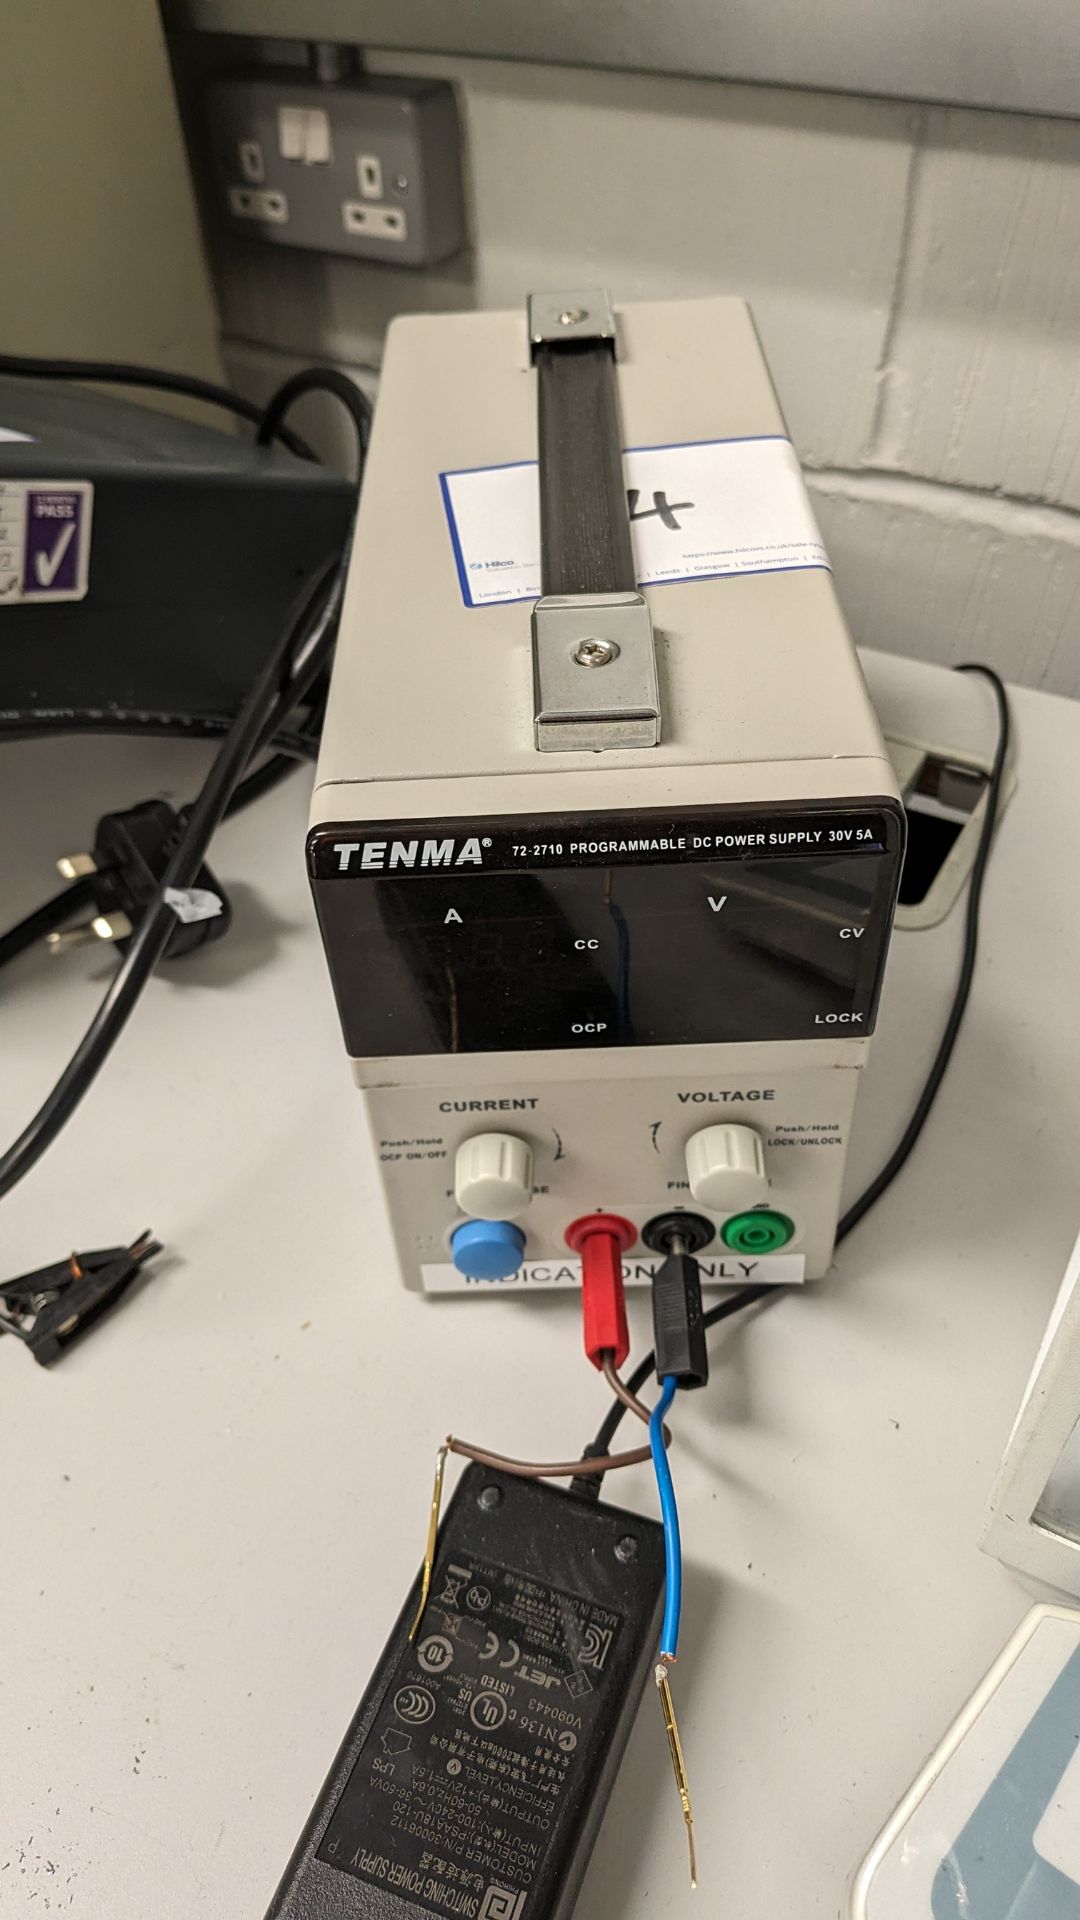 Tenma , 72-2710, Programmable DC Power Supply